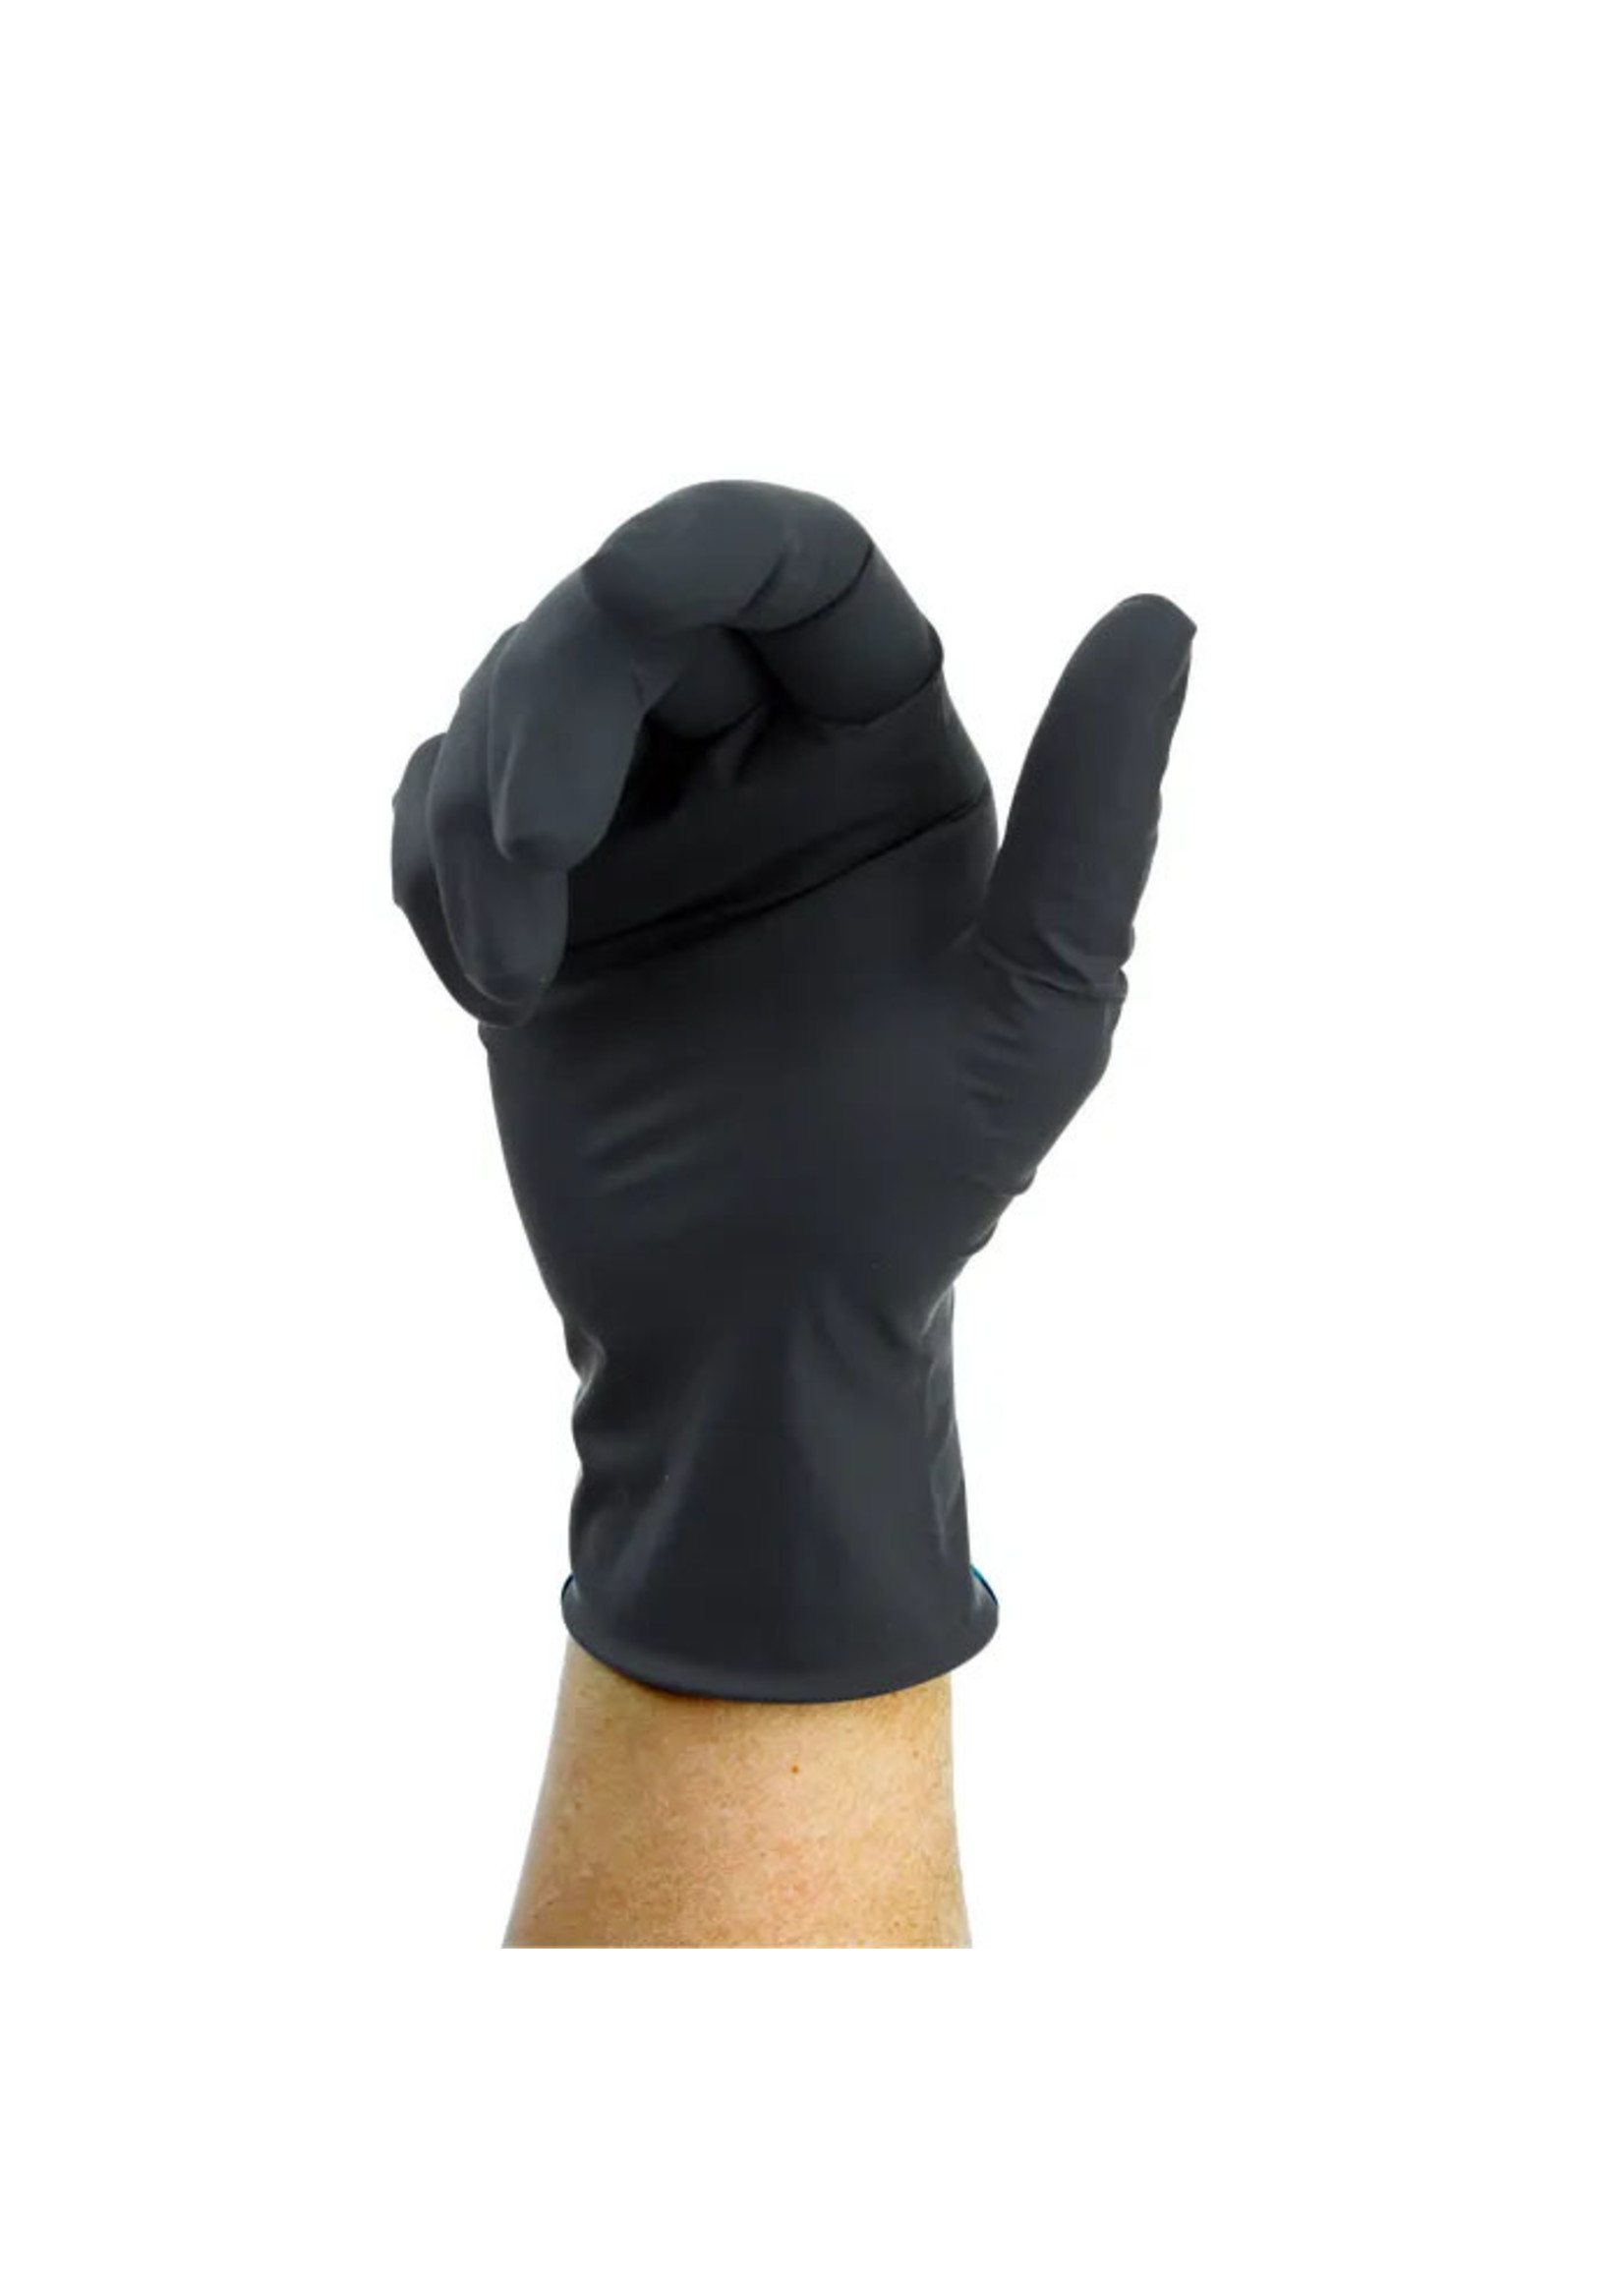 Dynarex Black Arrow Latex Exam Gloves, Powder-Free (SMALL)